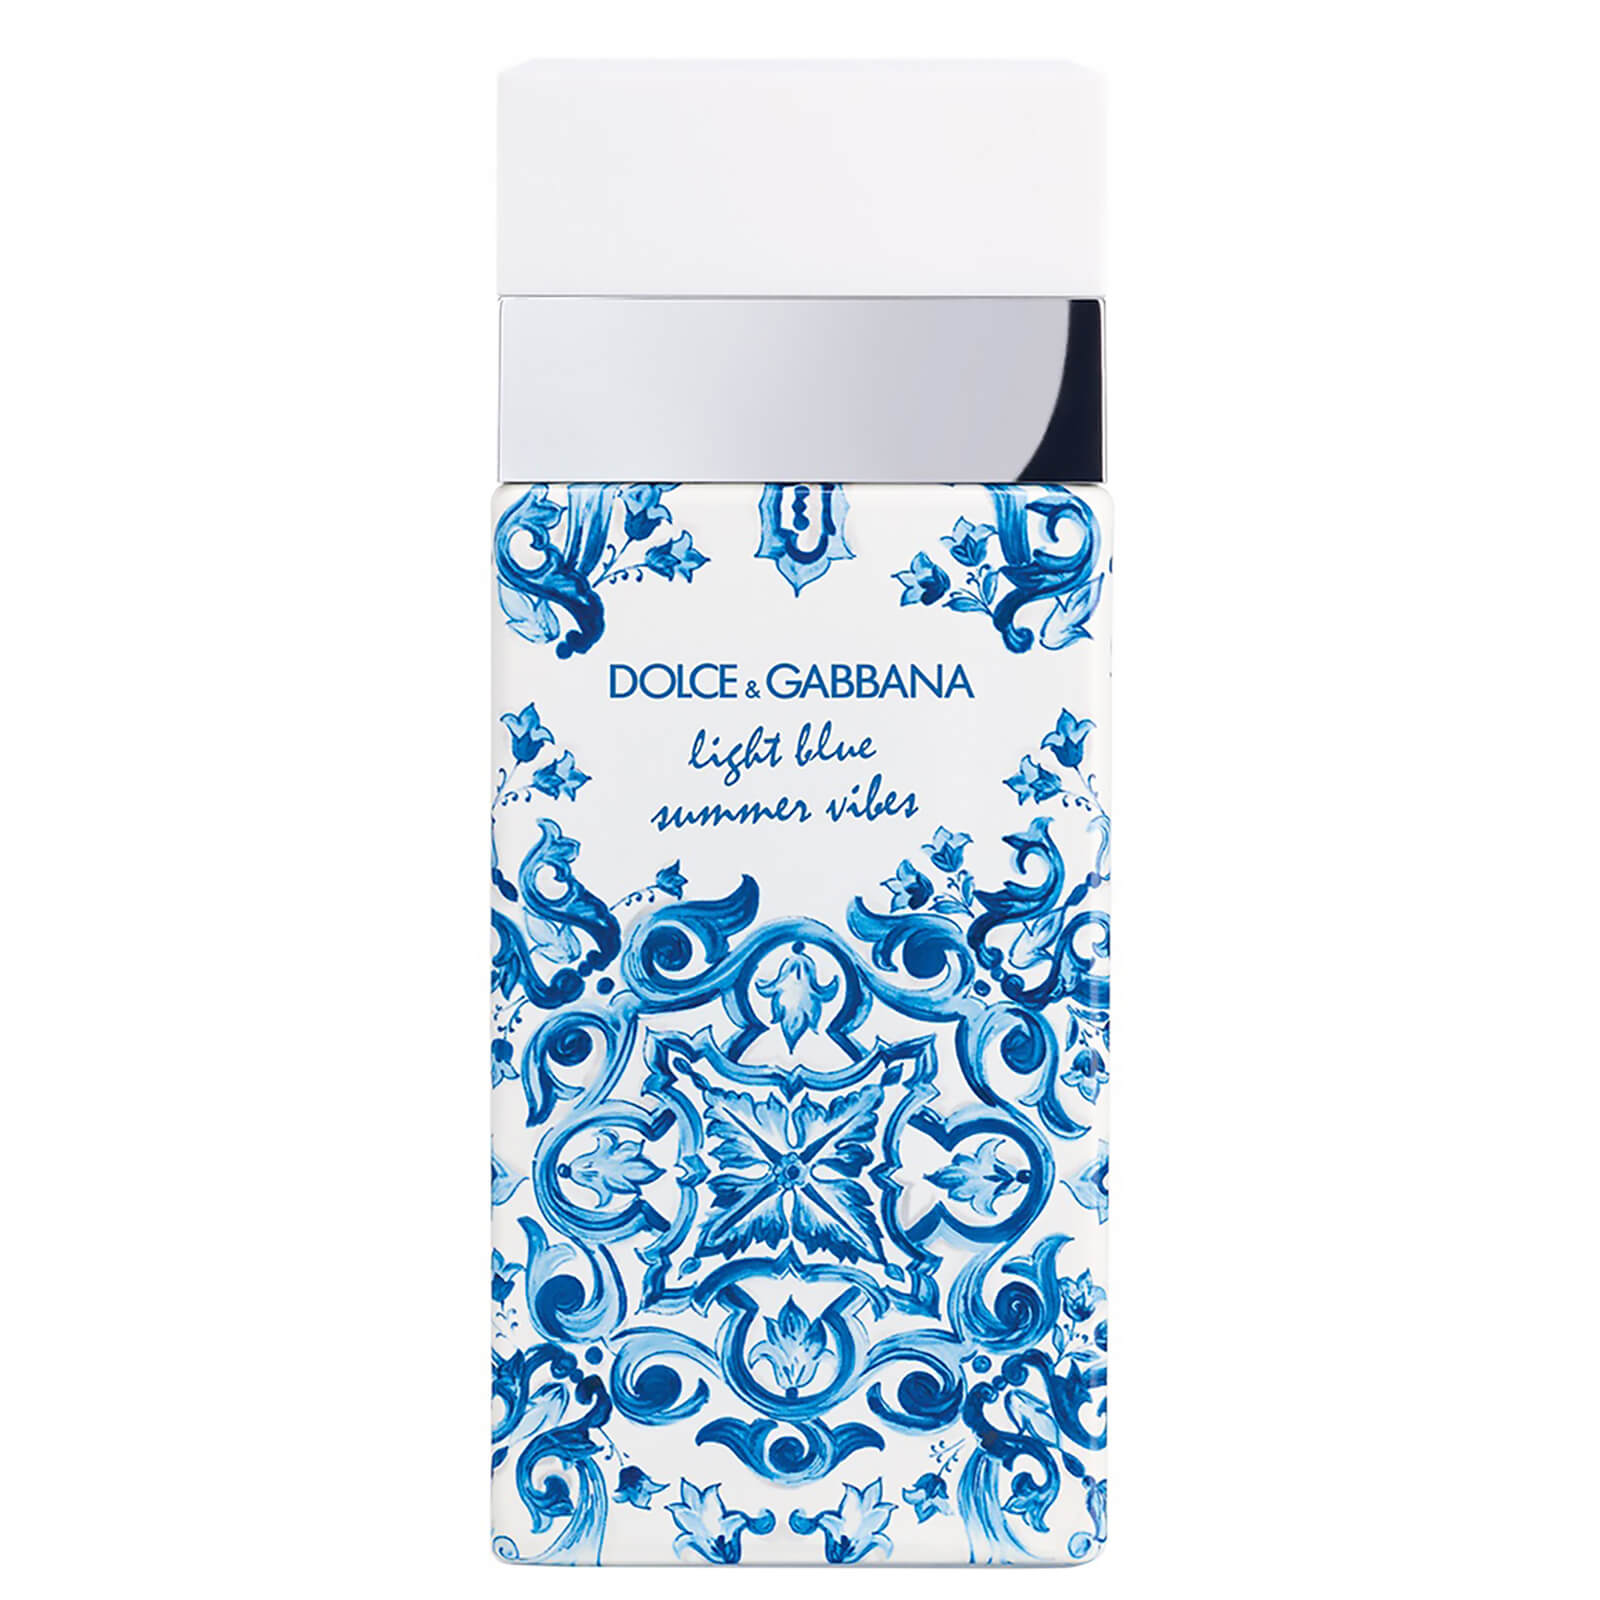 dolce-gabbana-light-blue-summer-vibes-limited-edition-eau-de-toilette-spray-100-ml